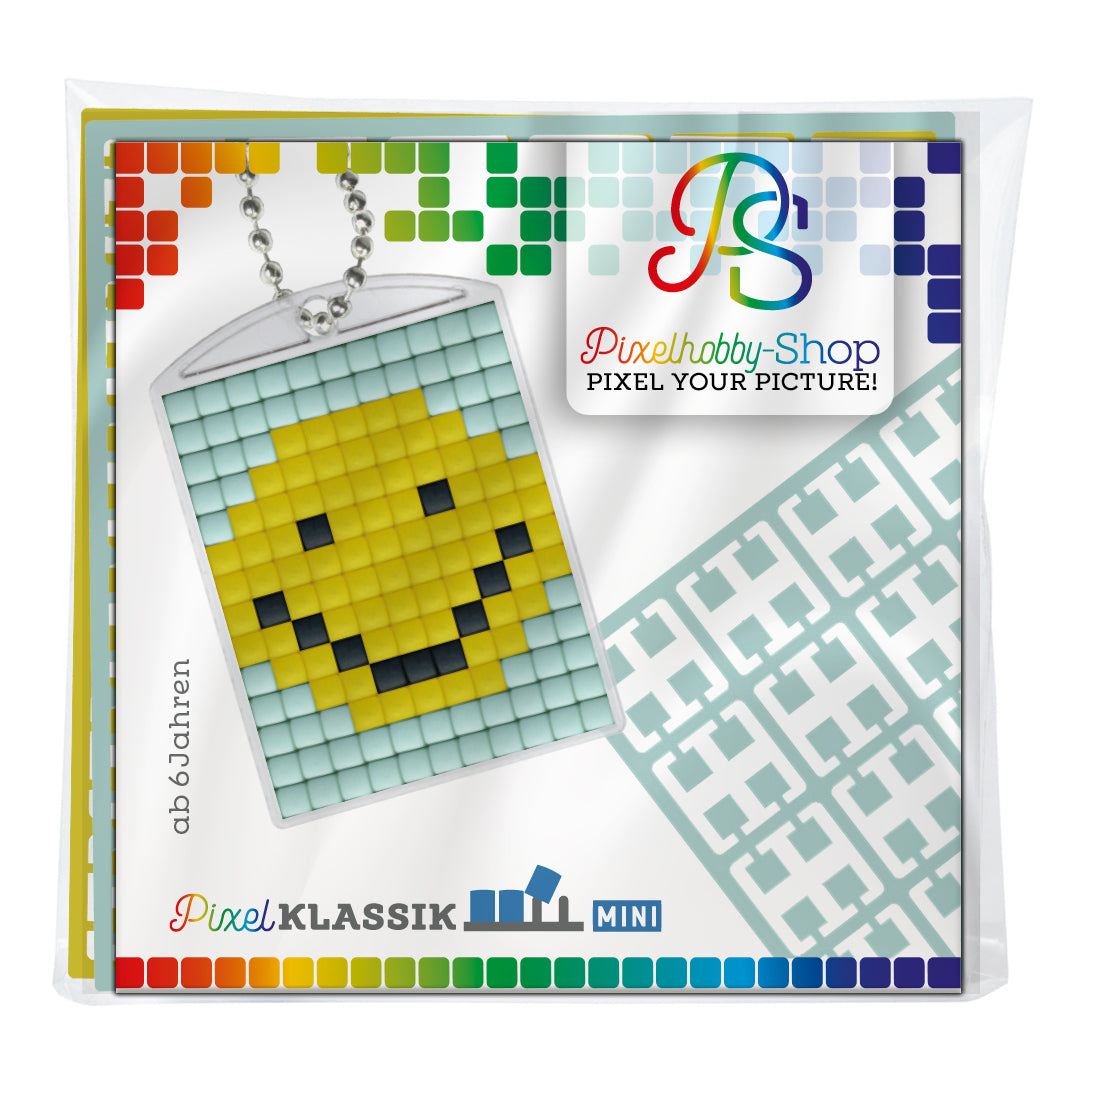 Pixel Hobby Medallion Set - Smiley